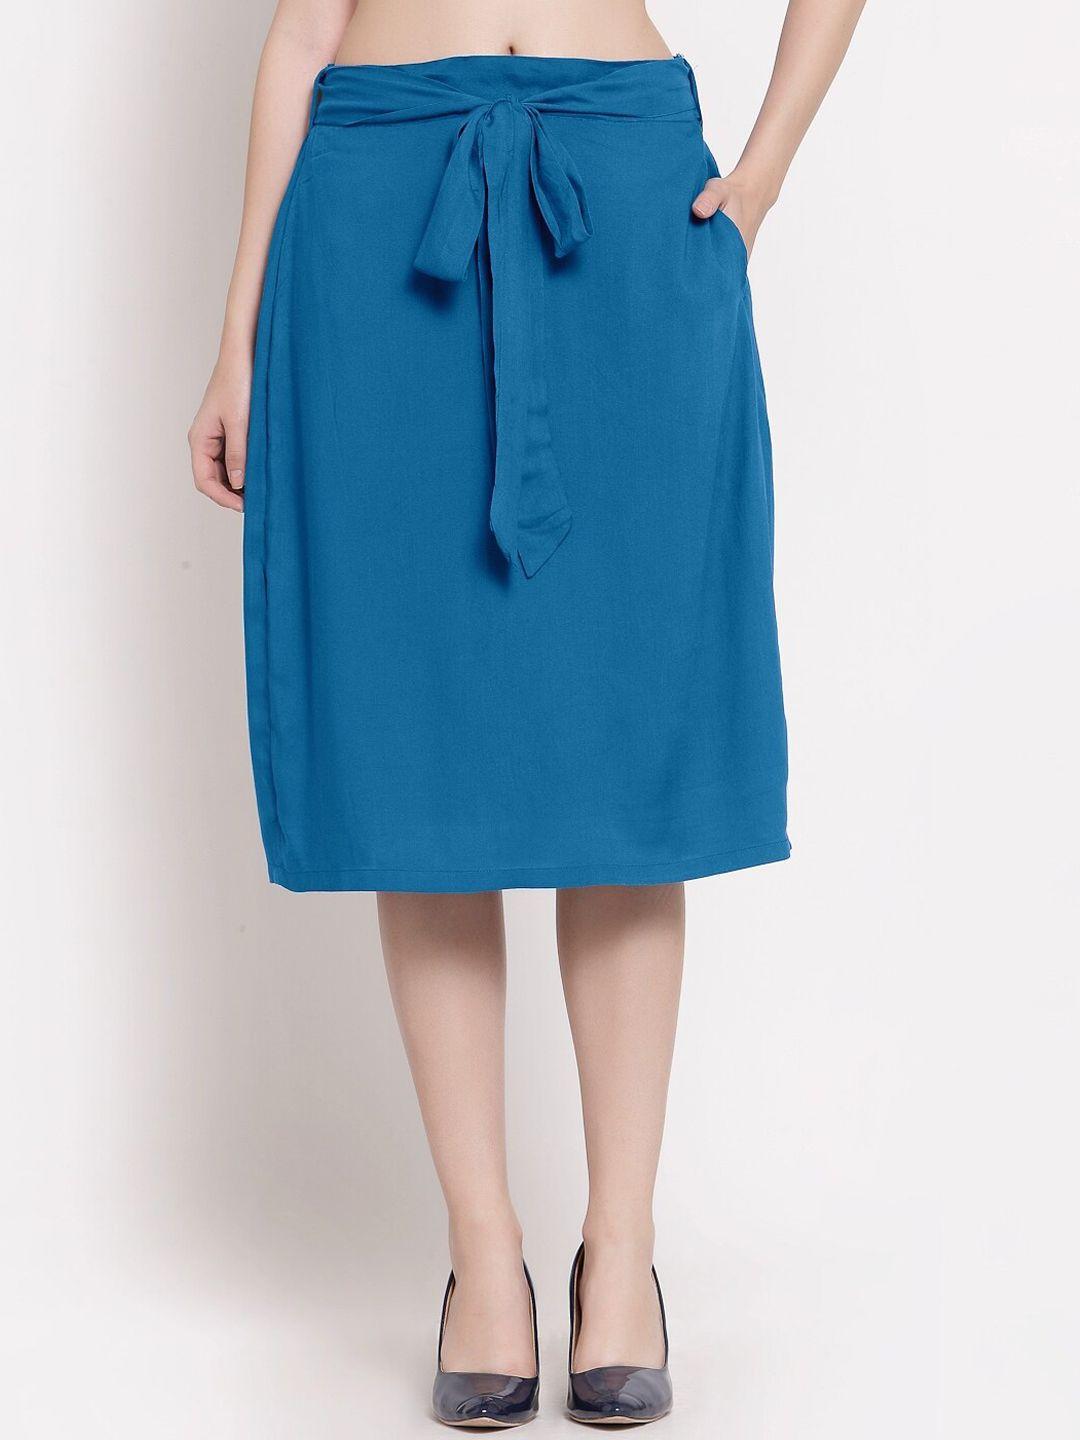 patrorna women blue solid a-line skirt